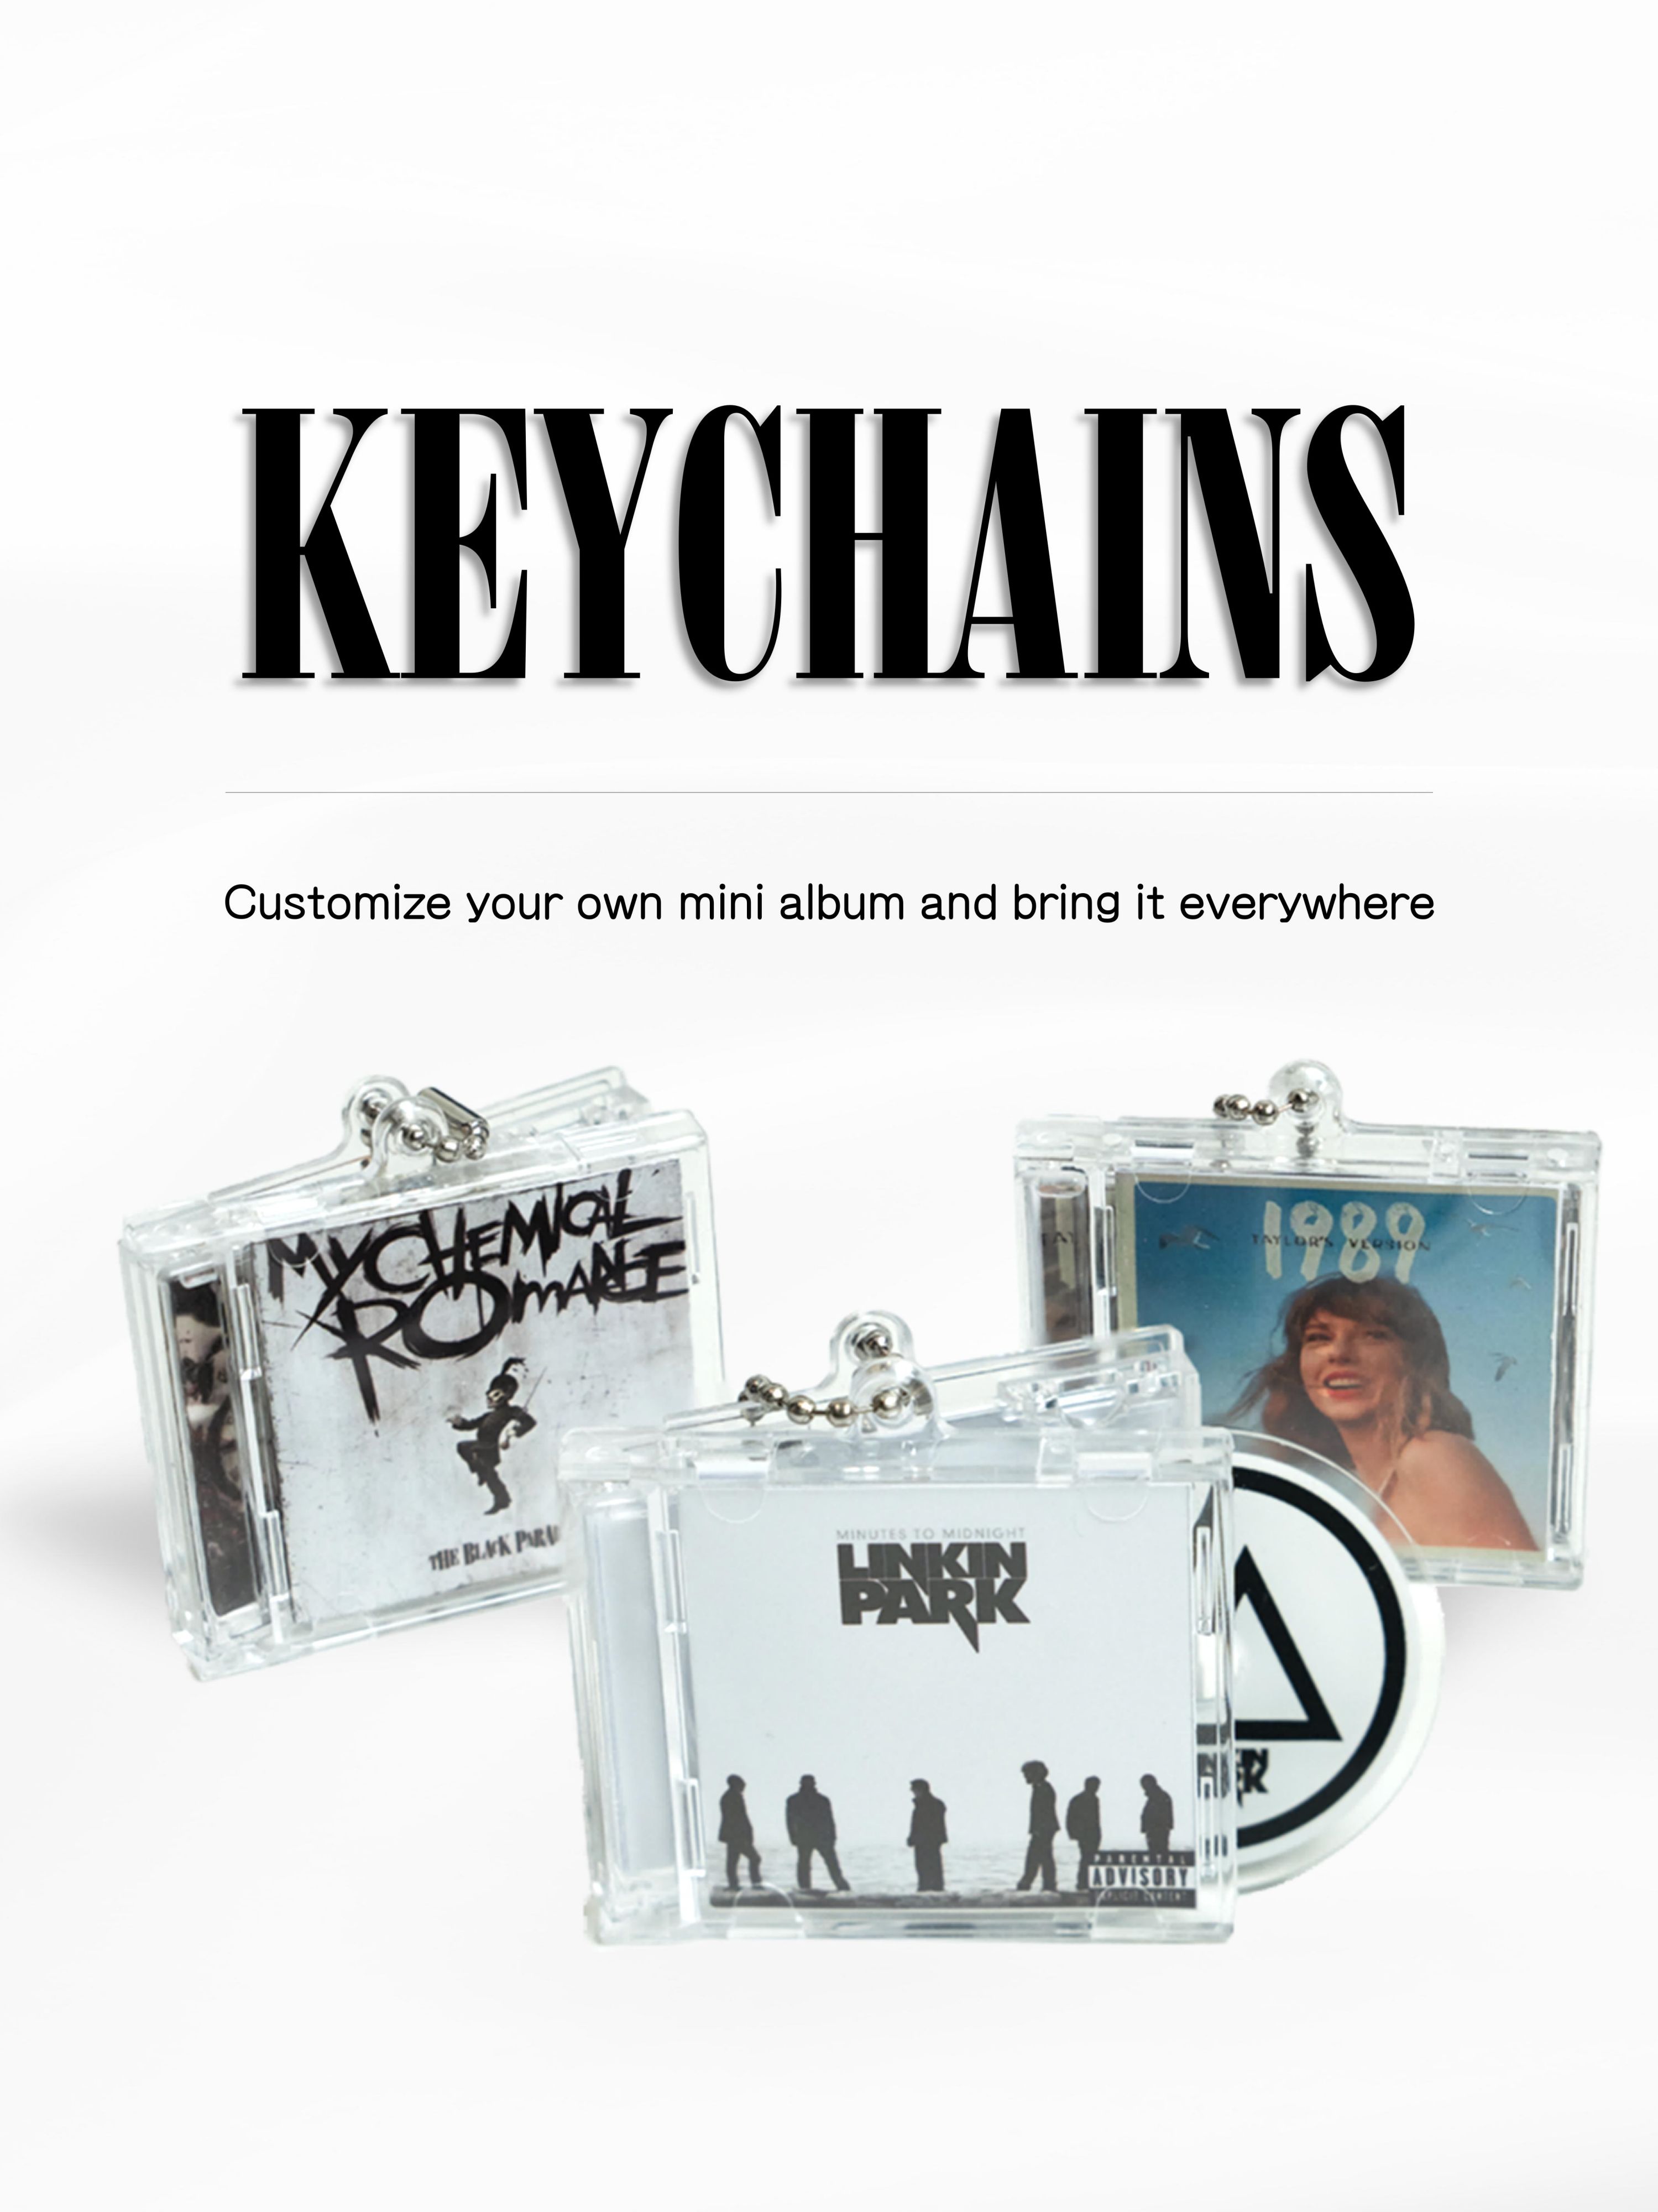 Taylor's Version Acrylic Keychain